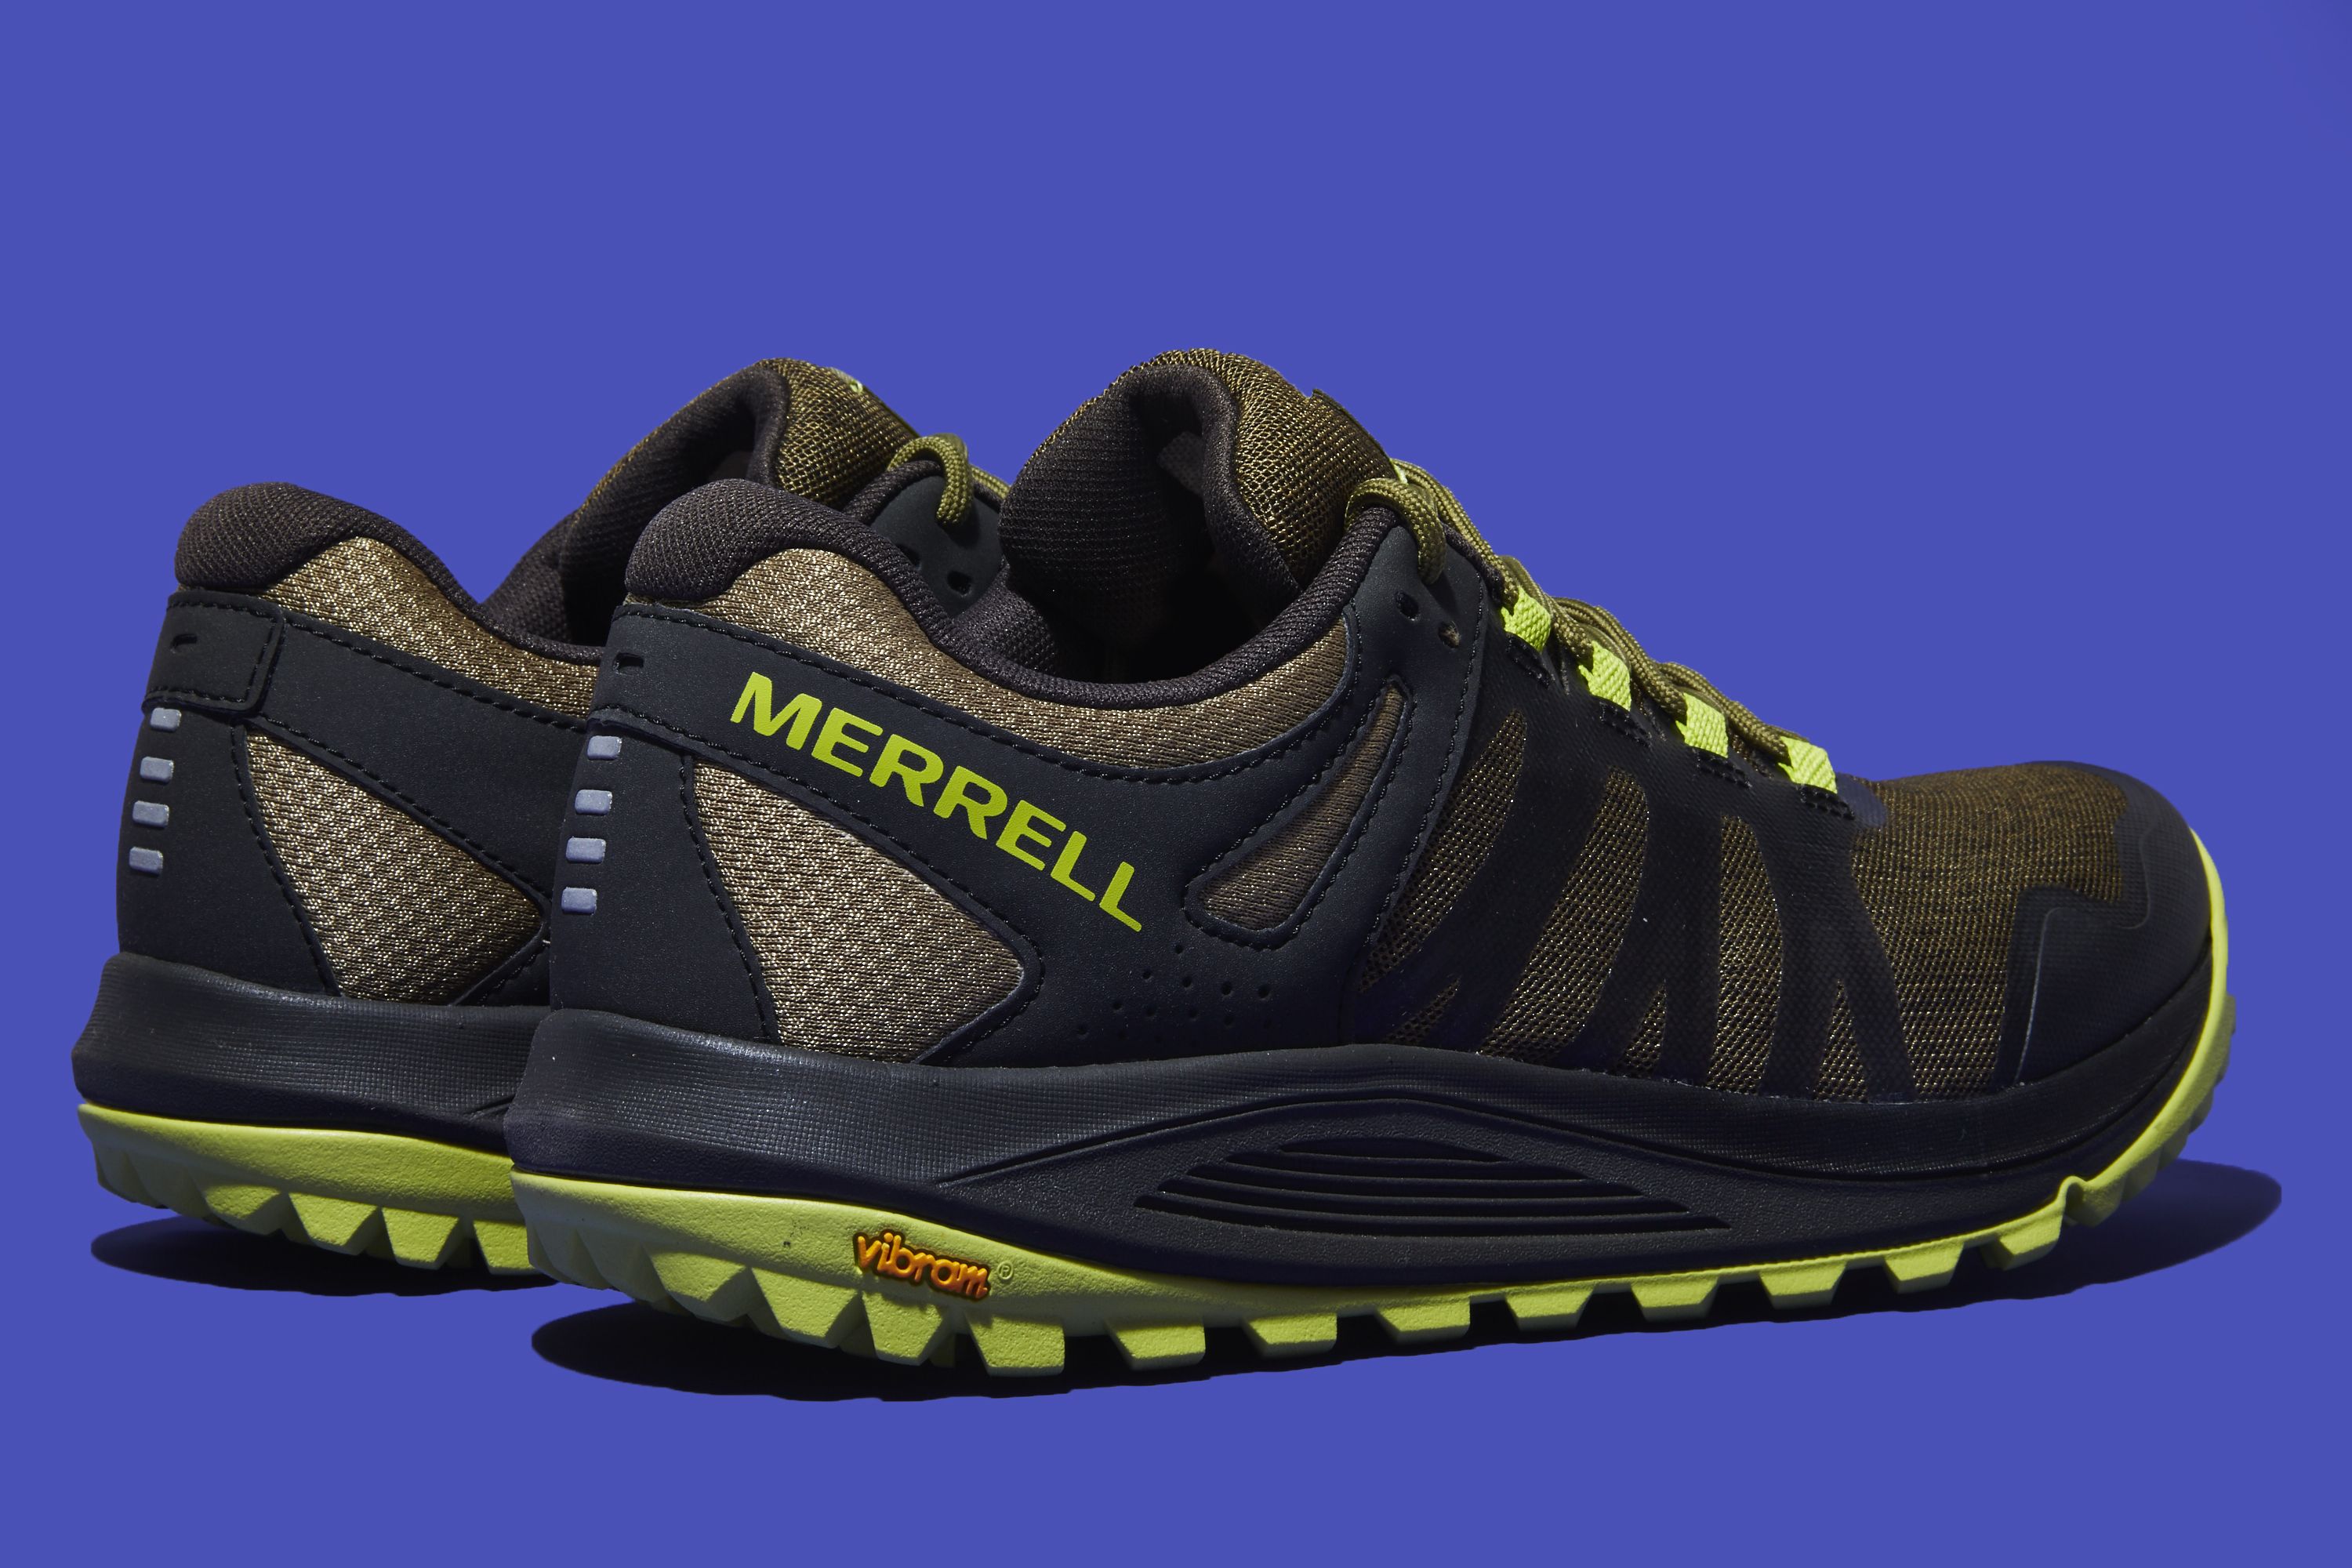 Merrell Nova Shoe Review 2019 | Trail Shoes for Men